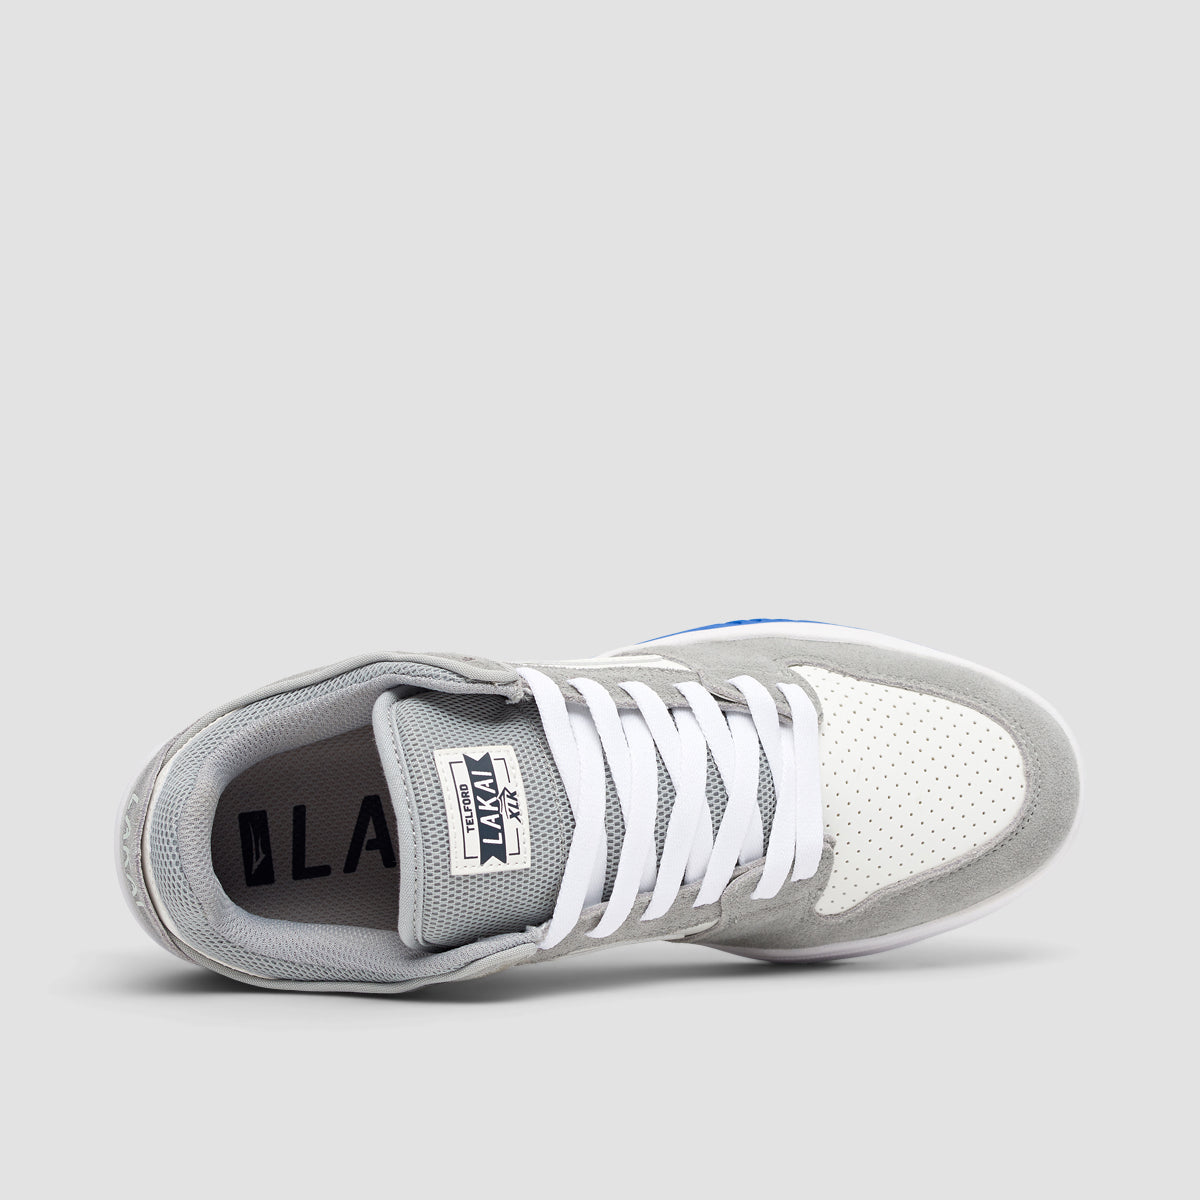 Lakai Telford Low Shoes - Grey/Blue UV Suede